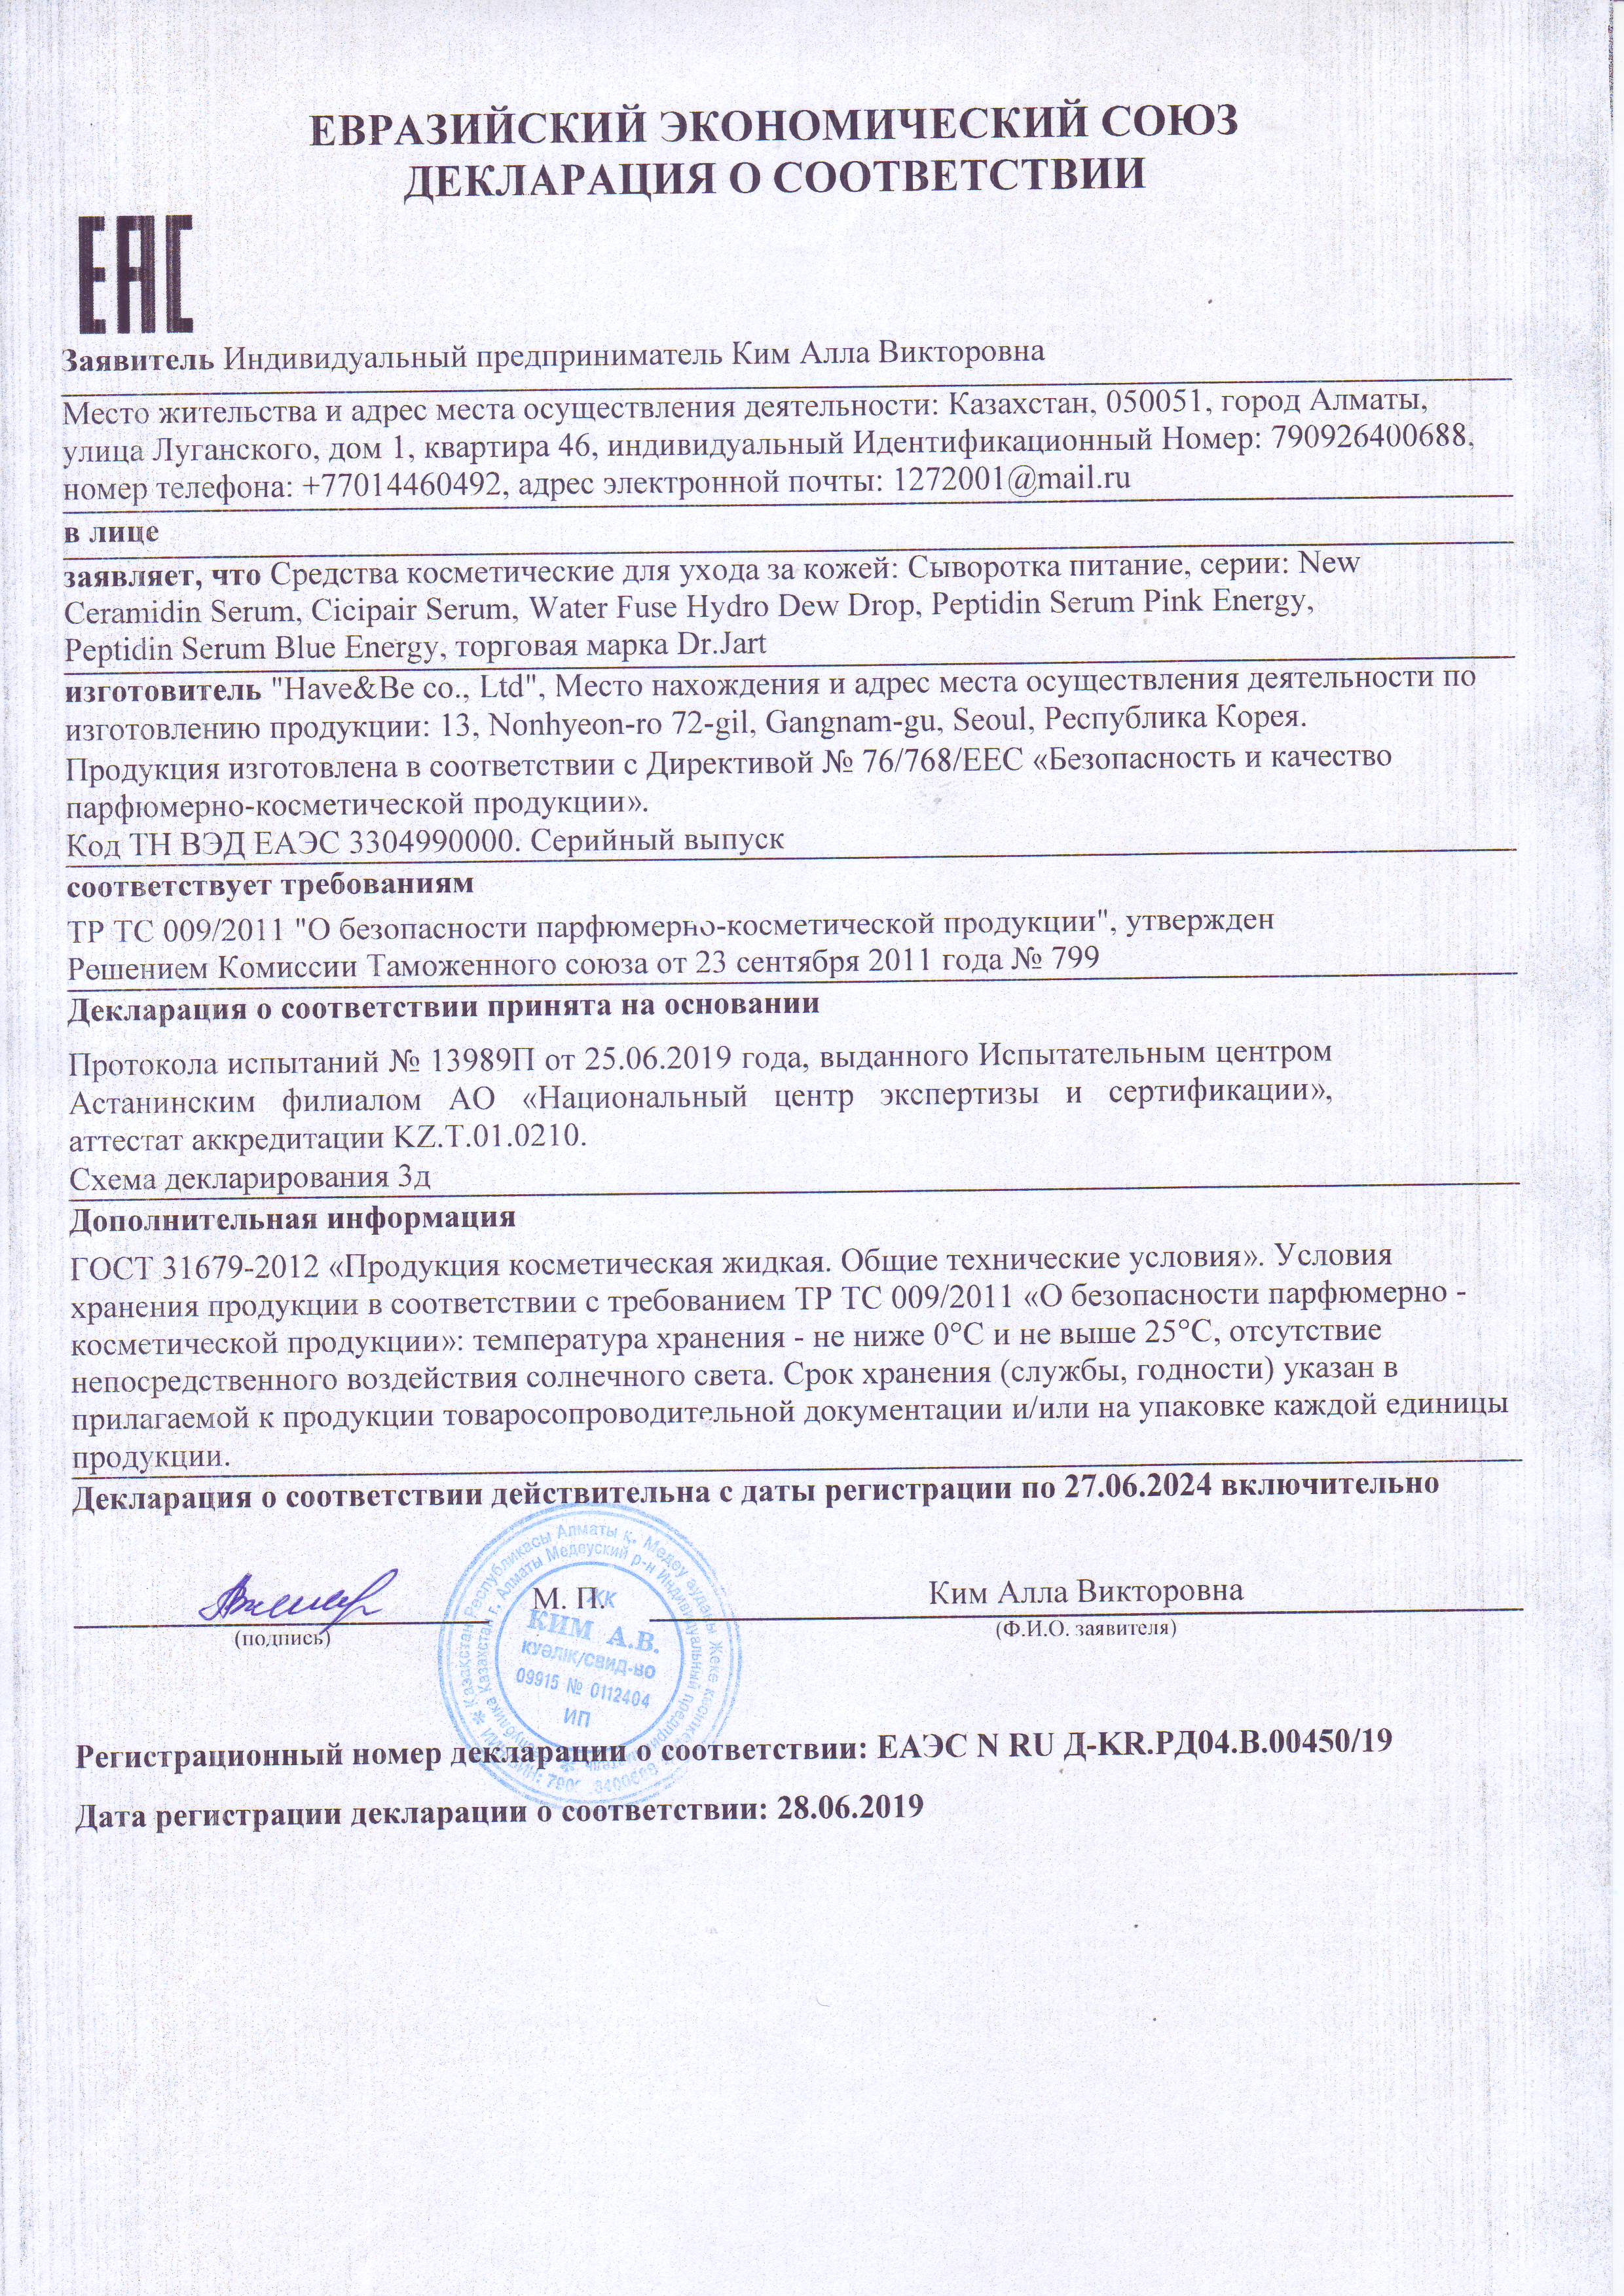 сертификат др джарт 6